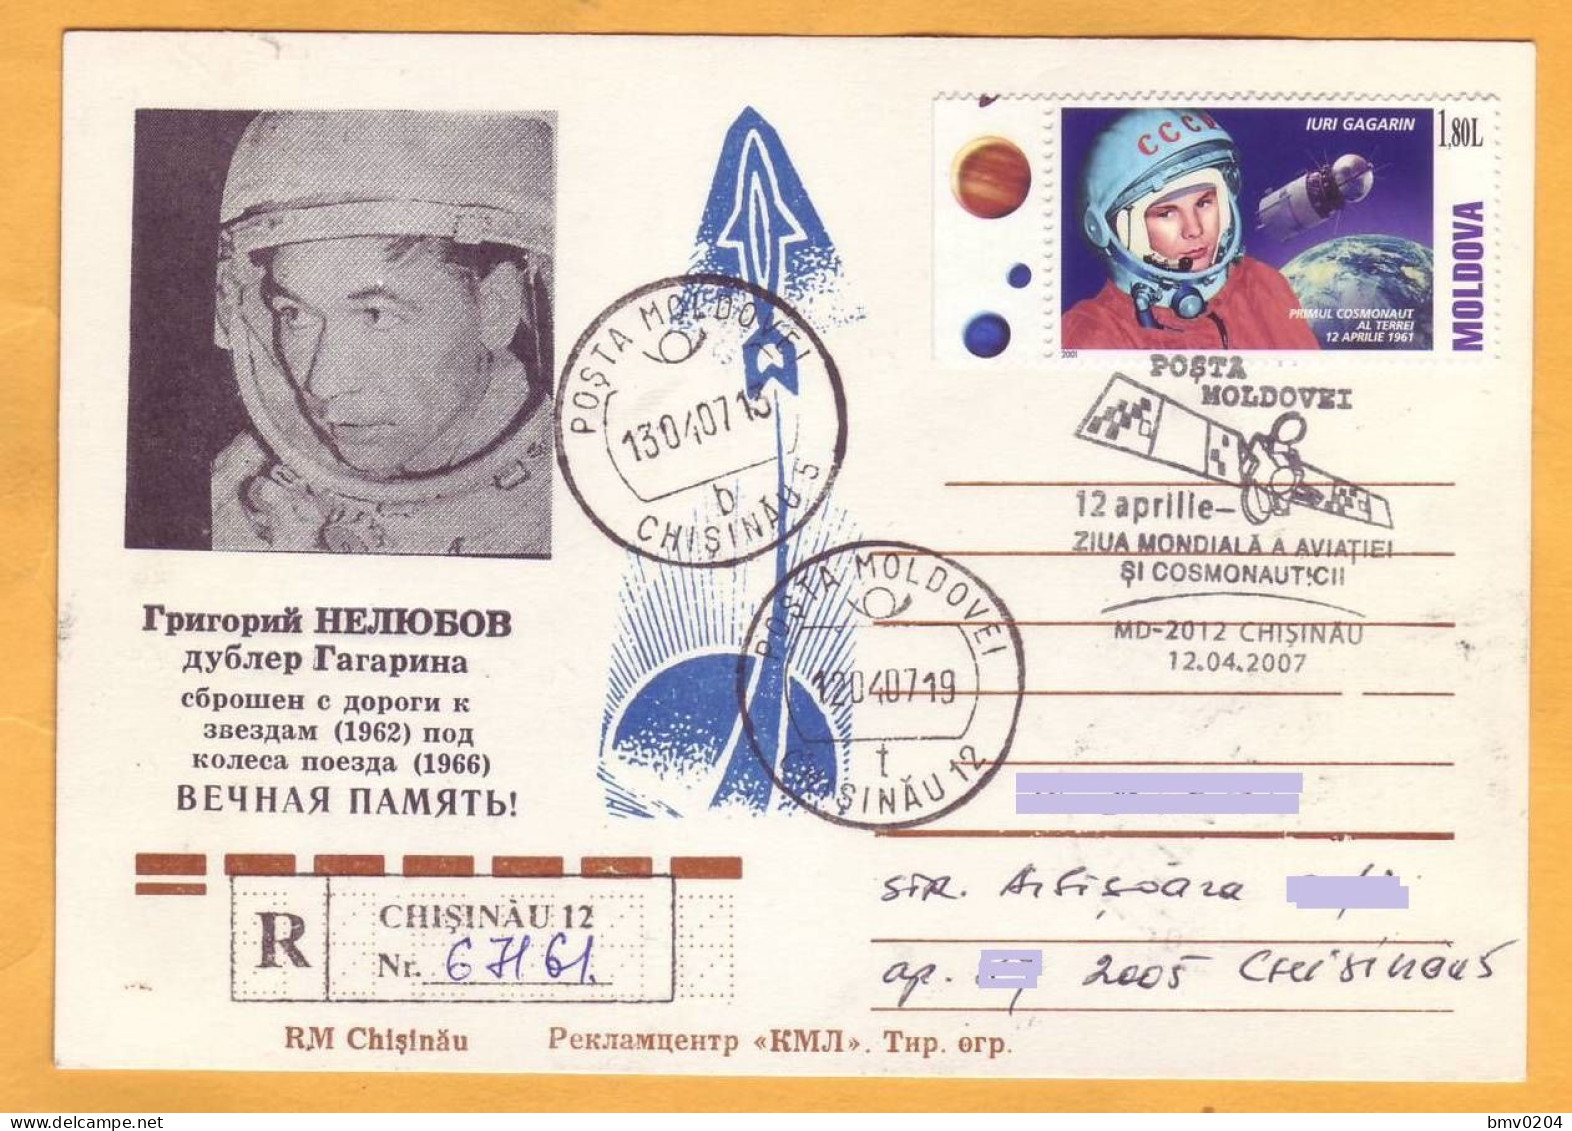 2007 Moldova Cover Special Cancellation "Day Of Aviation And Cosmonautics", Grigory NELYUBOV, Gagarin's Understudy - Moldavie